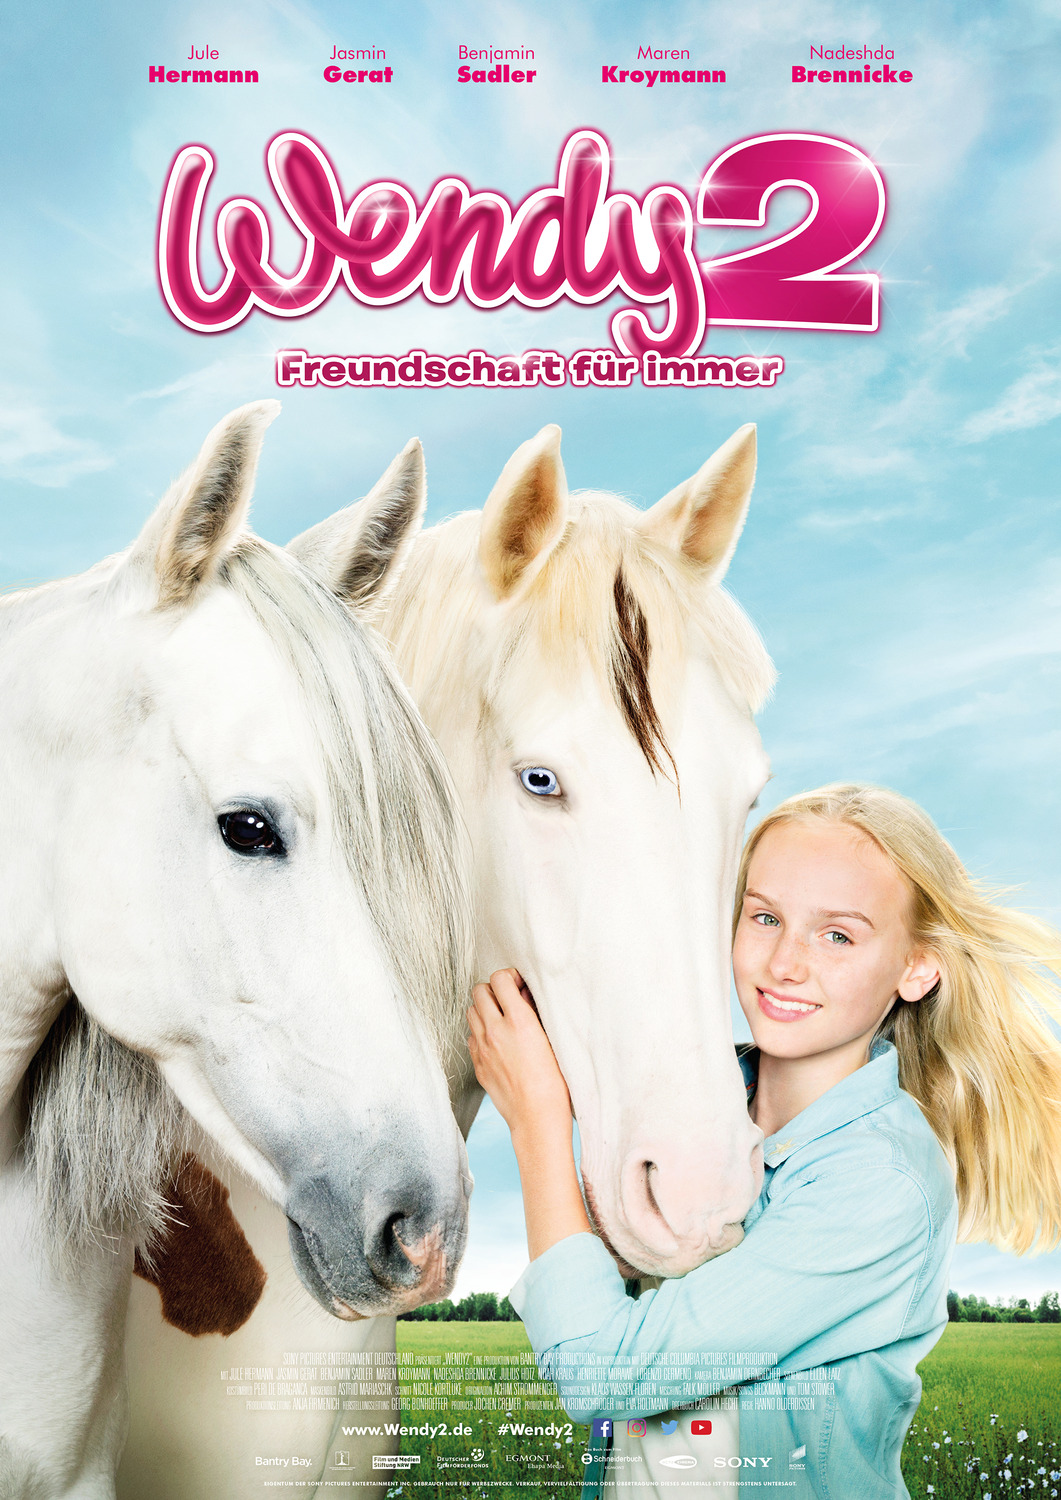 Extra Large Movie Poster Image for Wendy 2 - Freundschaft für immer 